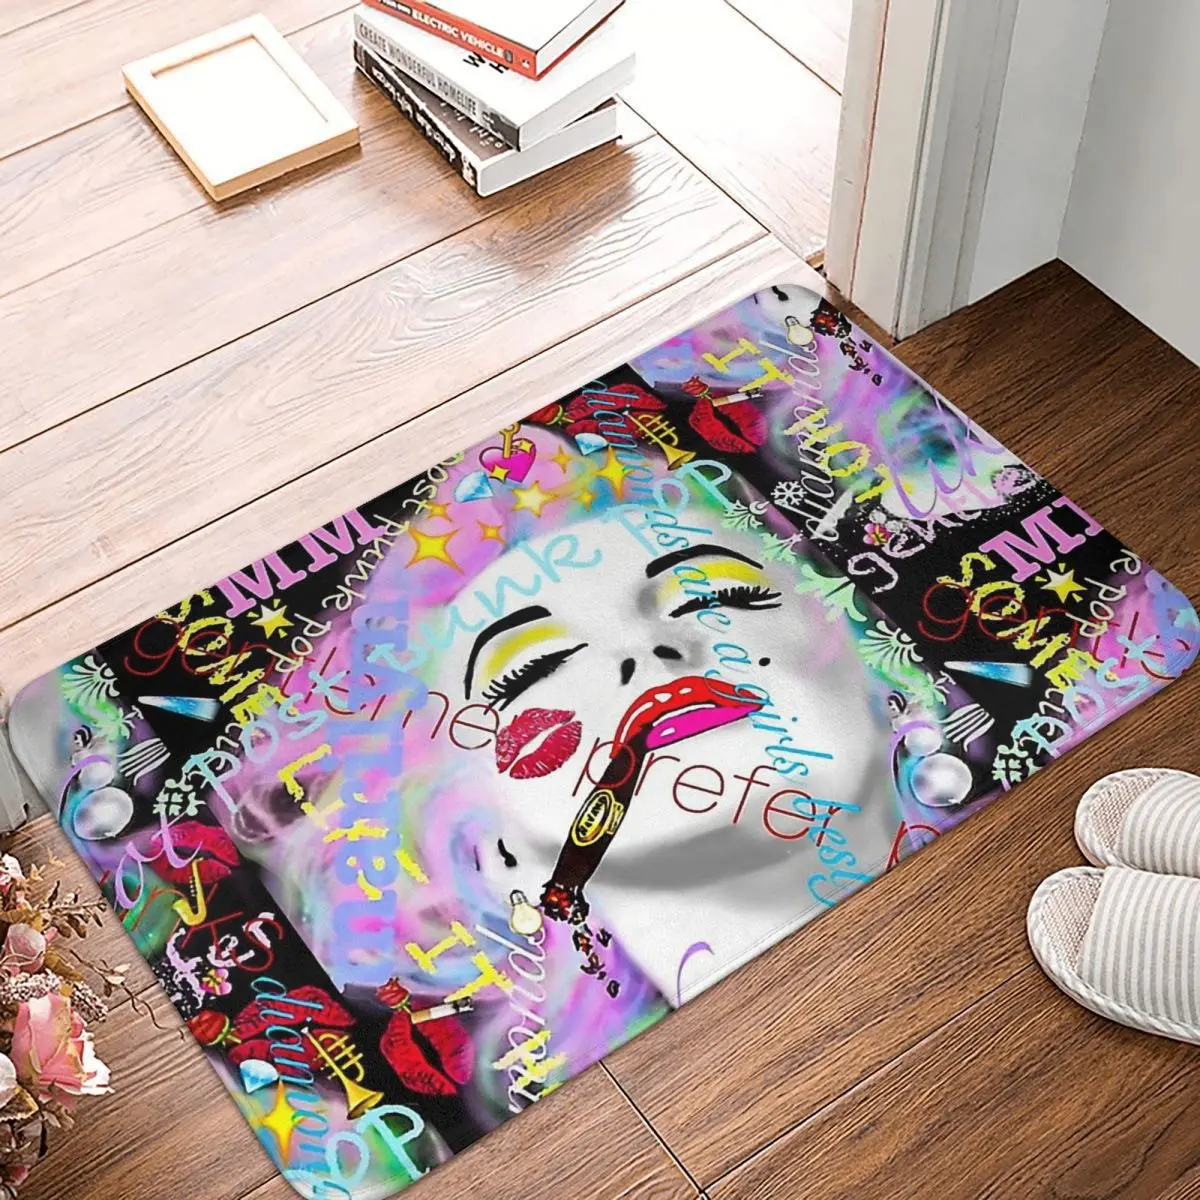 

Marilyn Monroe Sexy Goddess Bedroom Mat With Graffiti Doormat Kitchen Carpet Entrance Door Rug Home Decor